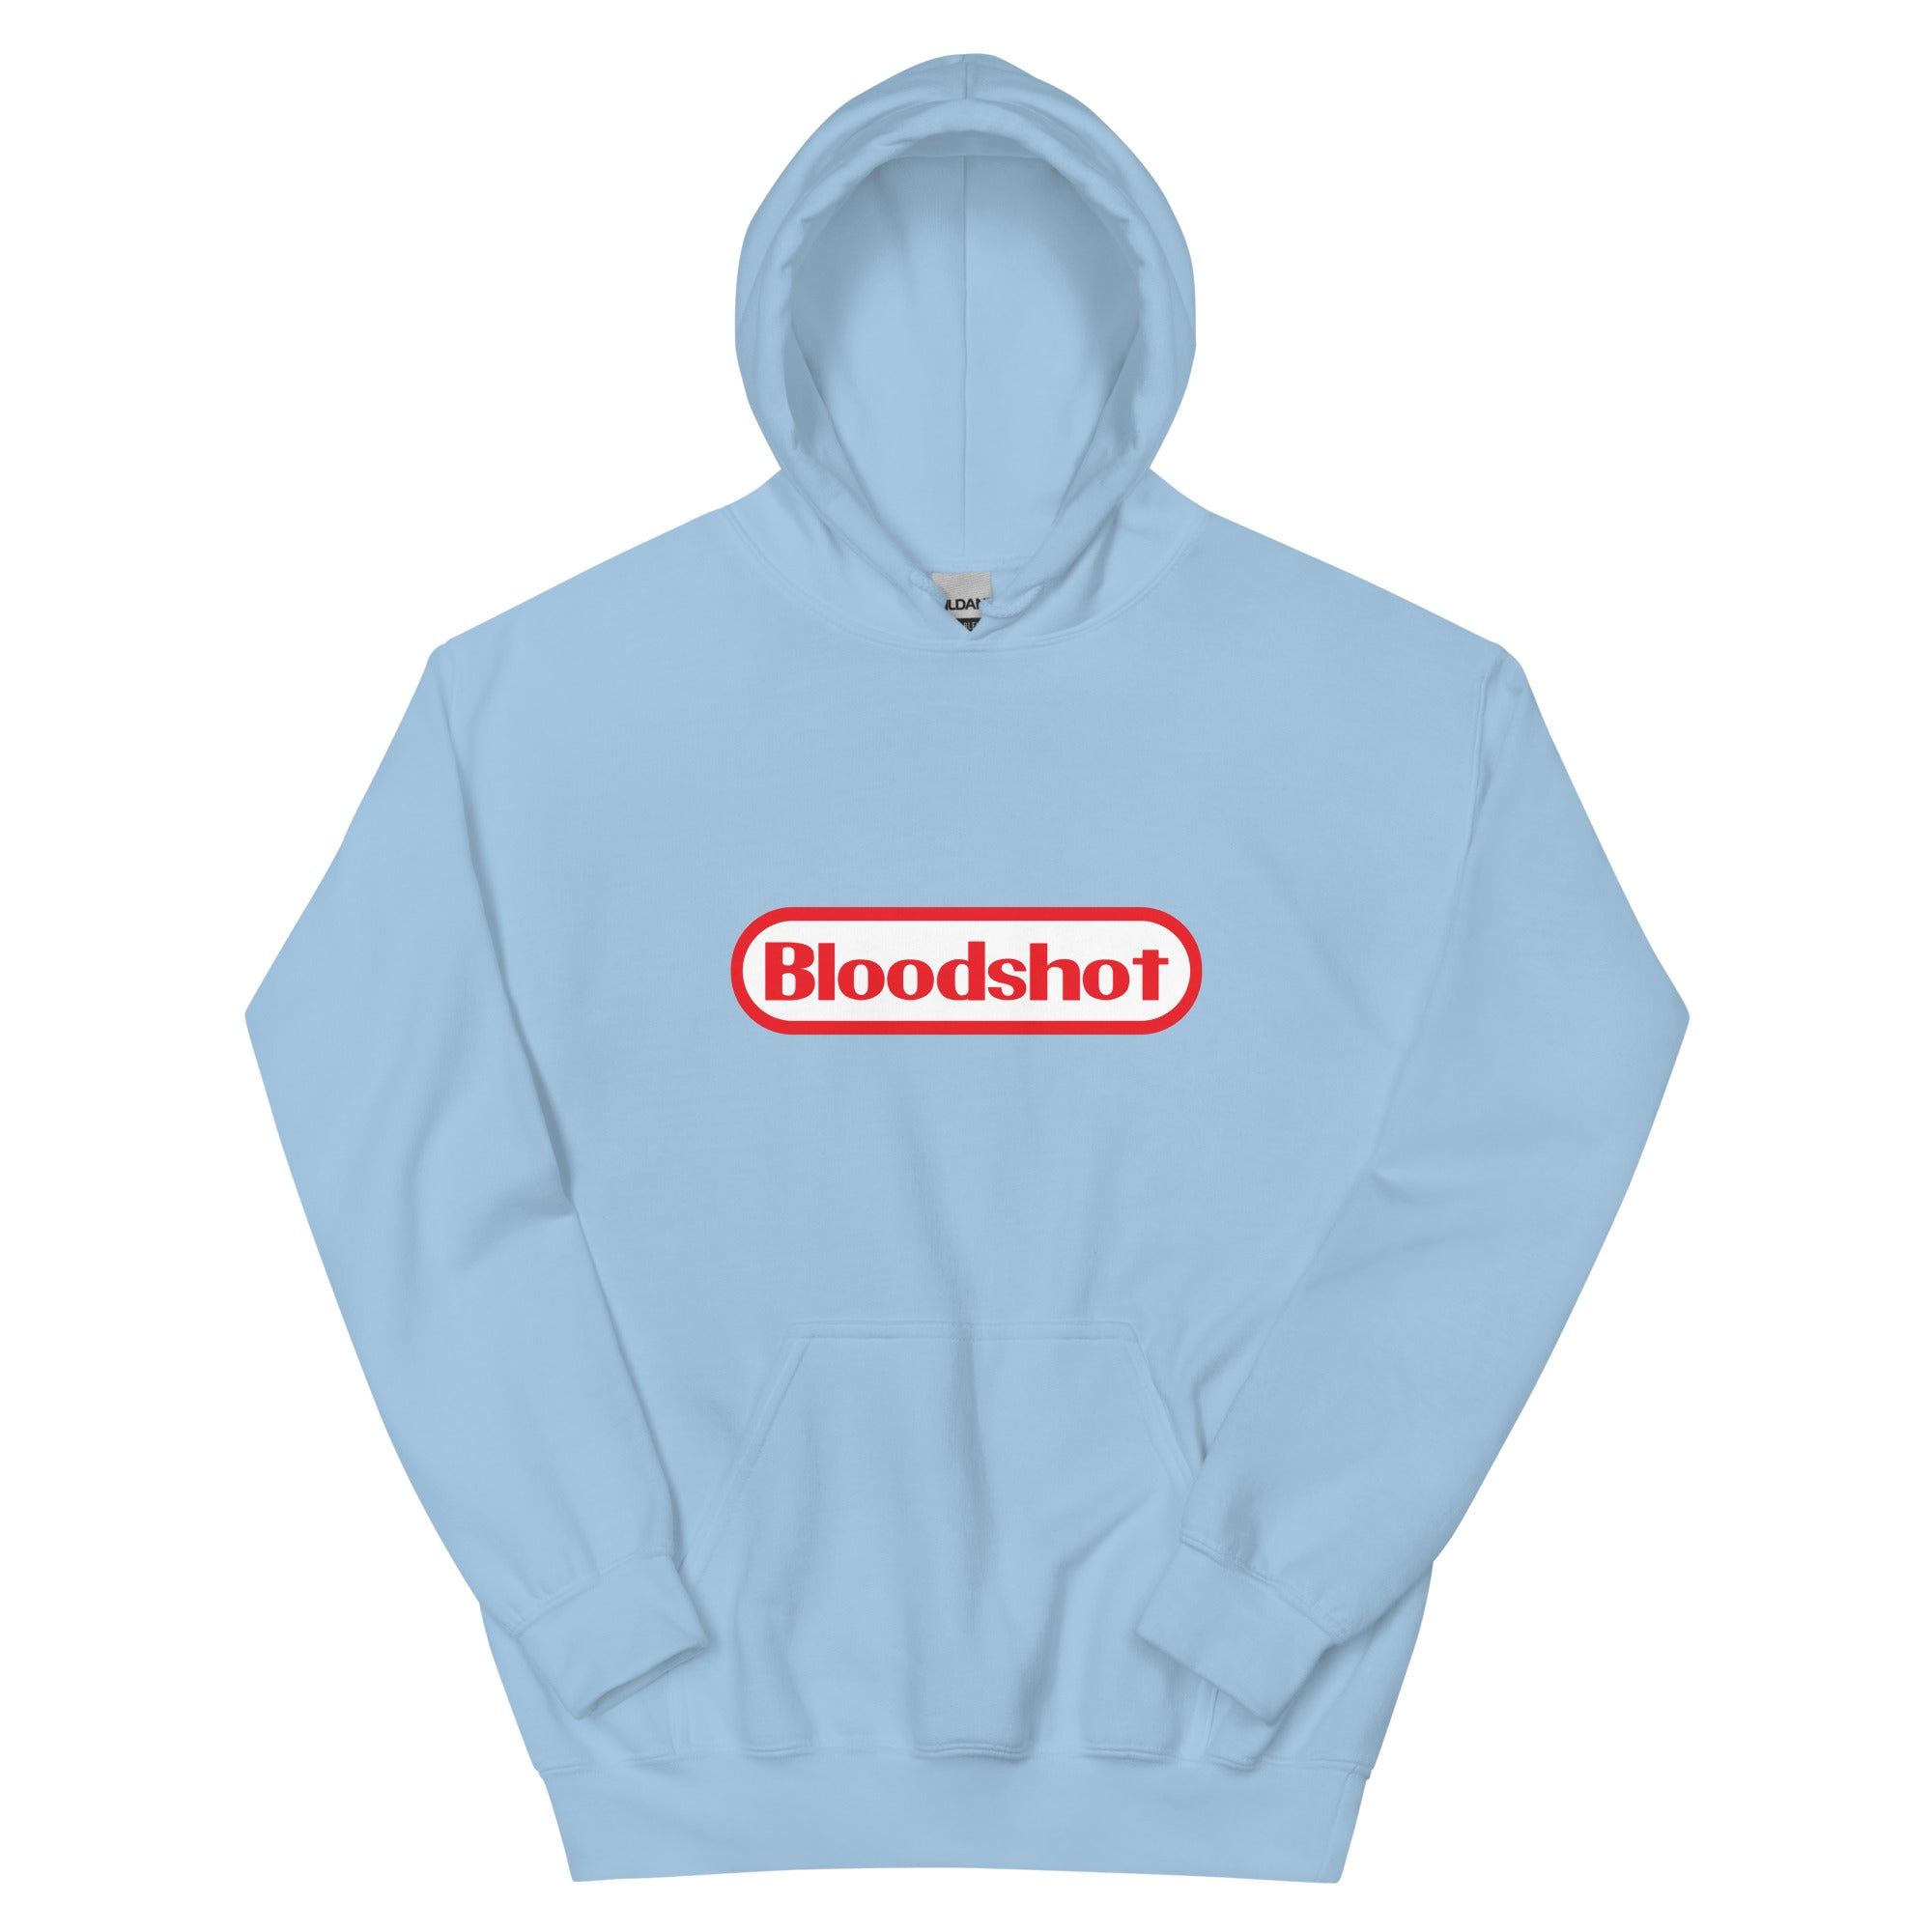 Bloodshot - Unisex Hoodie